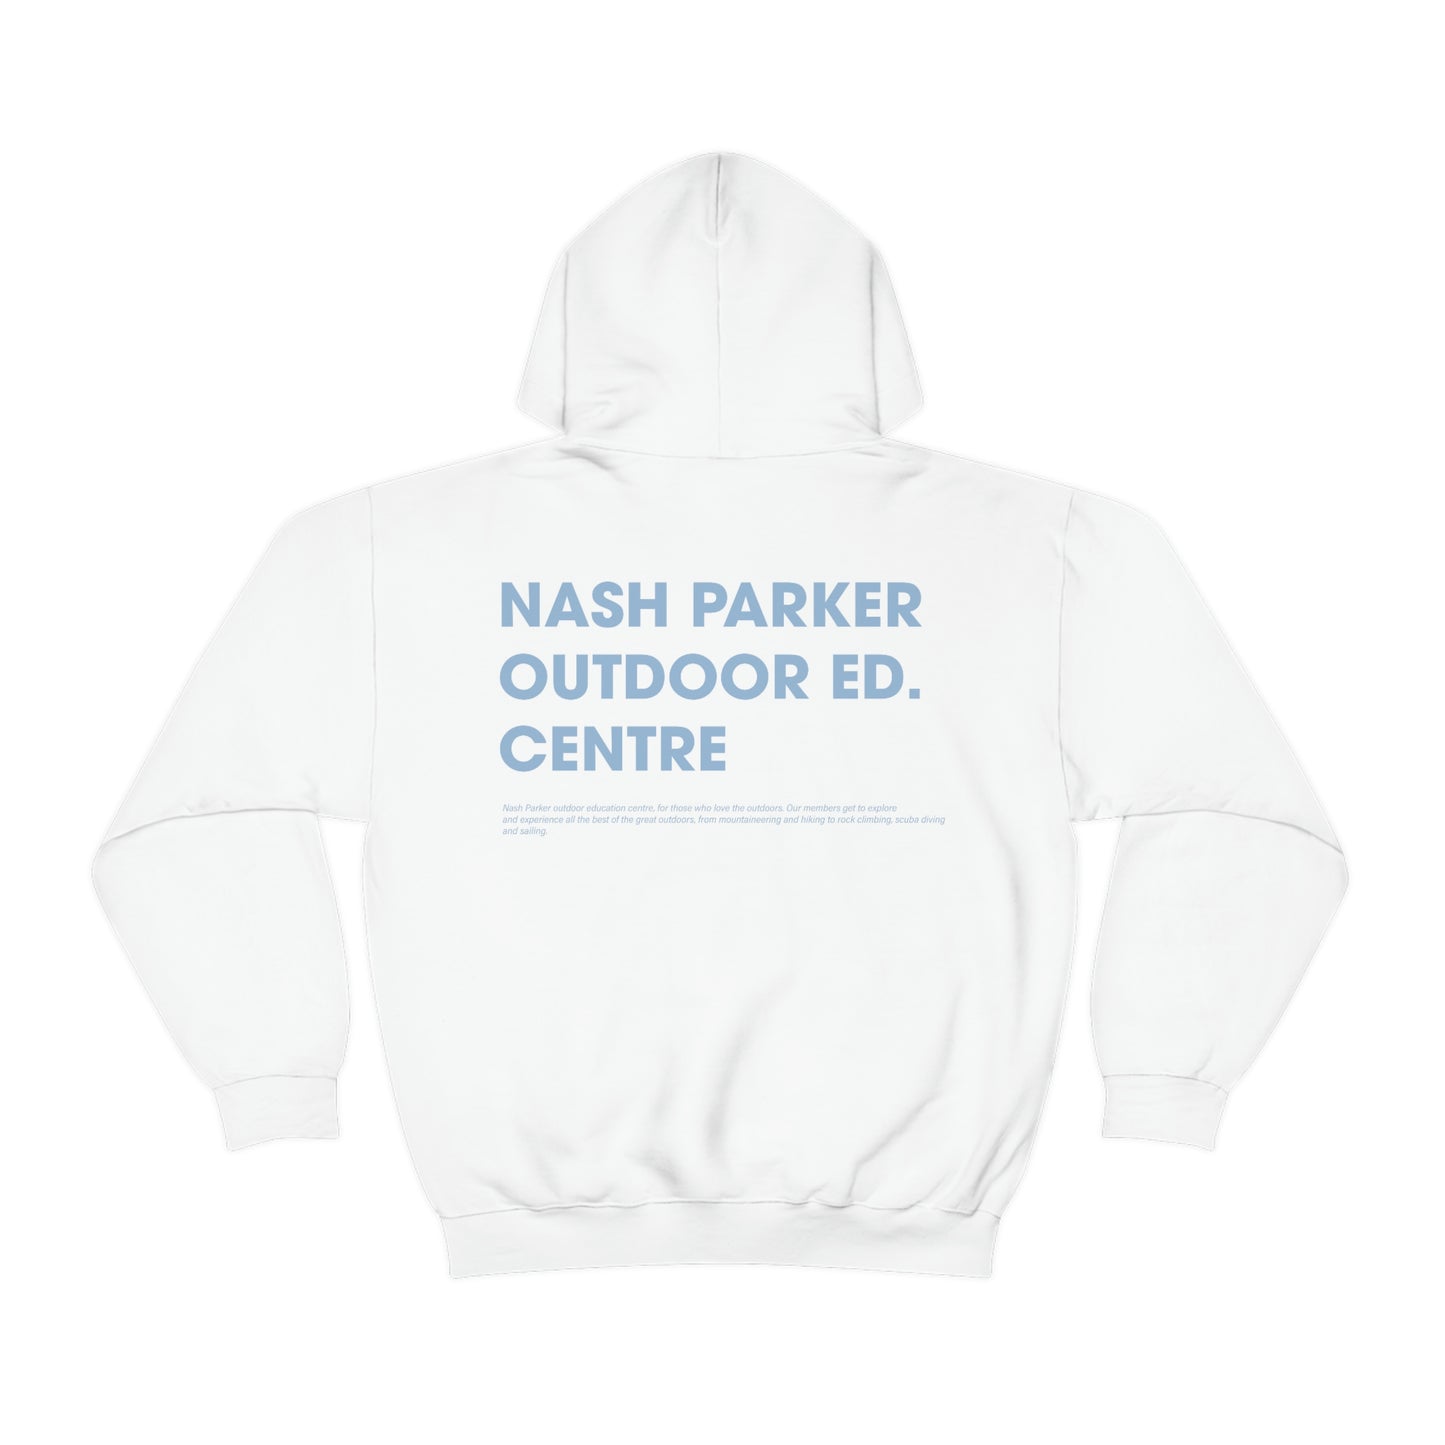 Nash Parker Outdoor Education Centre Hoodie Sweatshirt